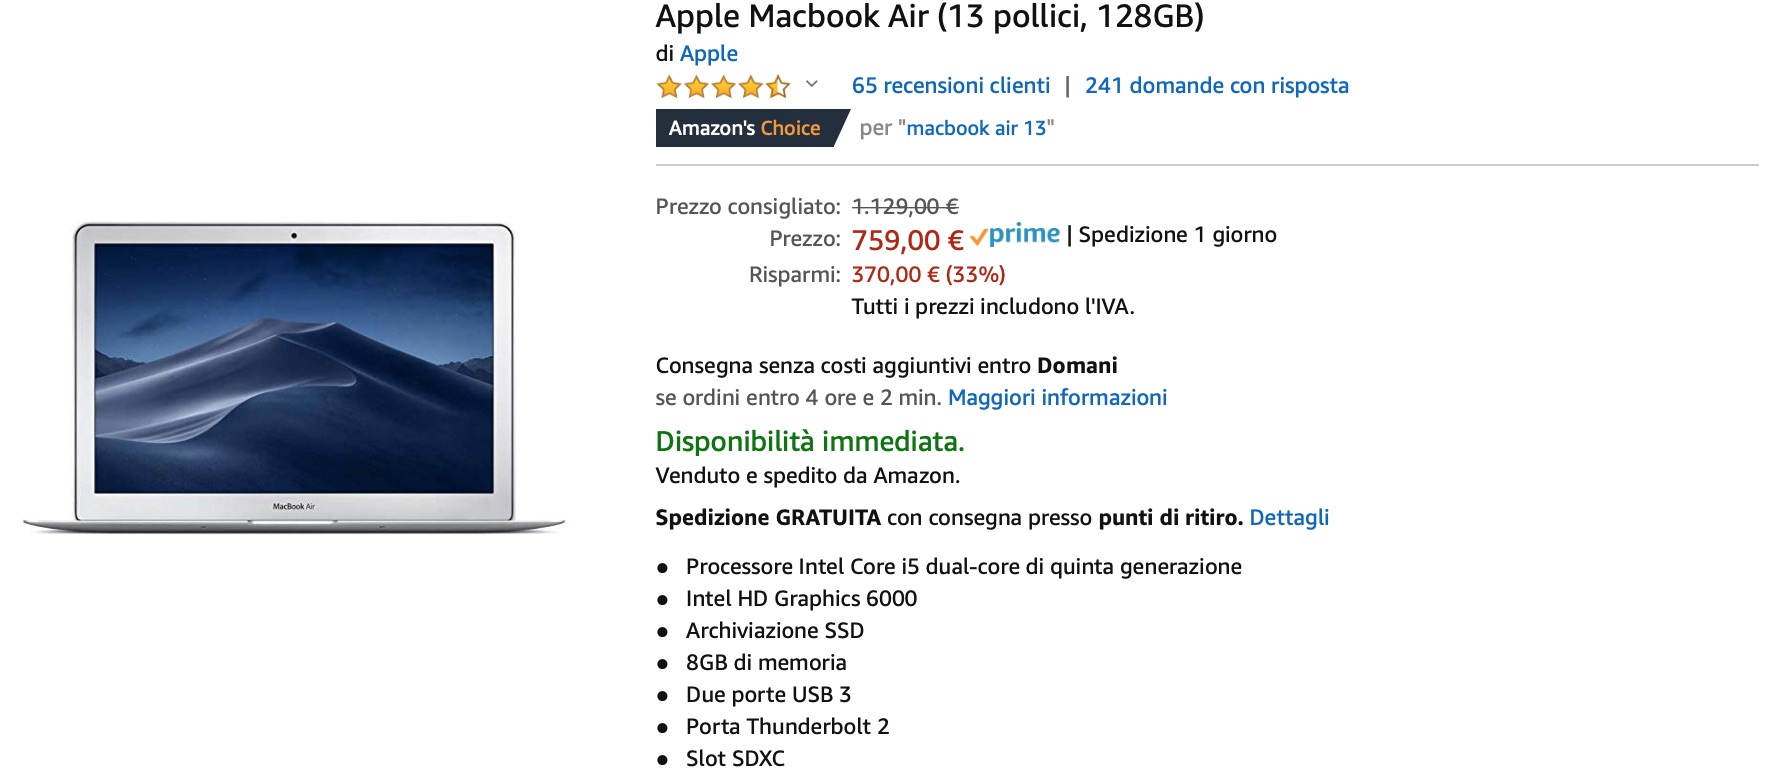 Black Friday in giugno: MacBook Air 13 a 759 euro